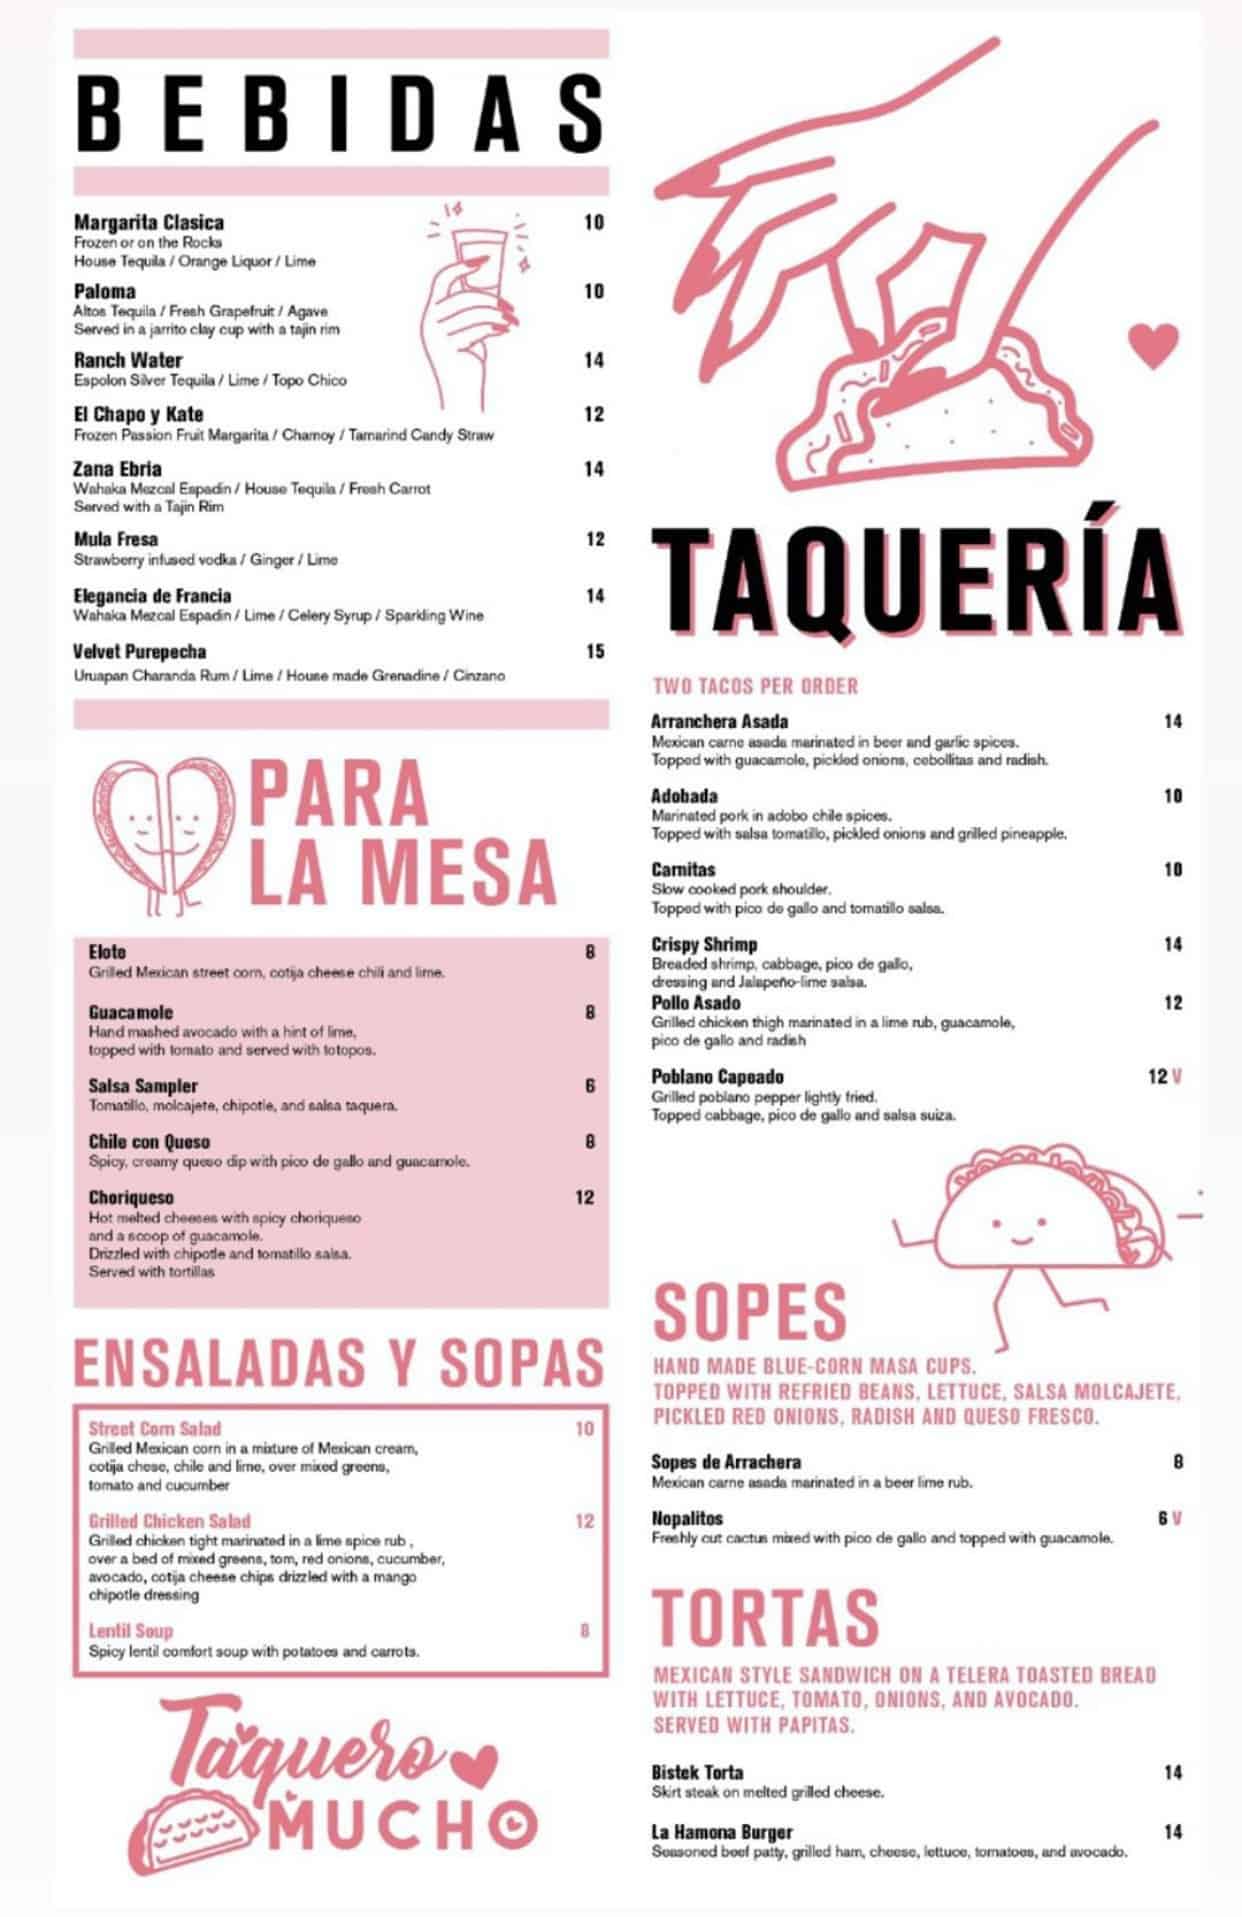 Taquero Mucho menu